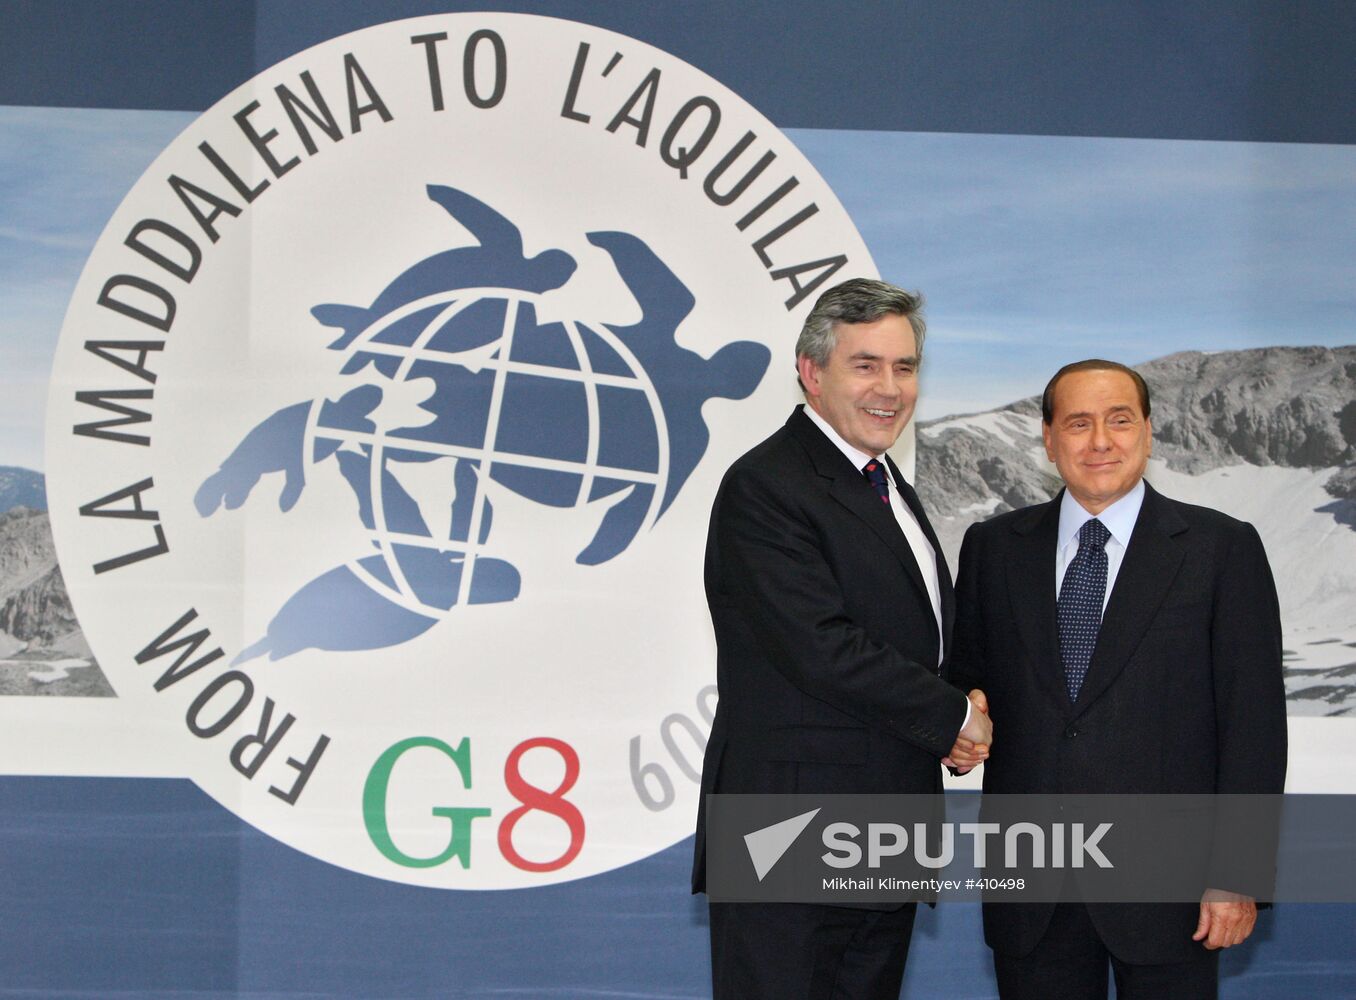 Gordon Brown, Silvio Berlusconi attend 2009 G8 summit